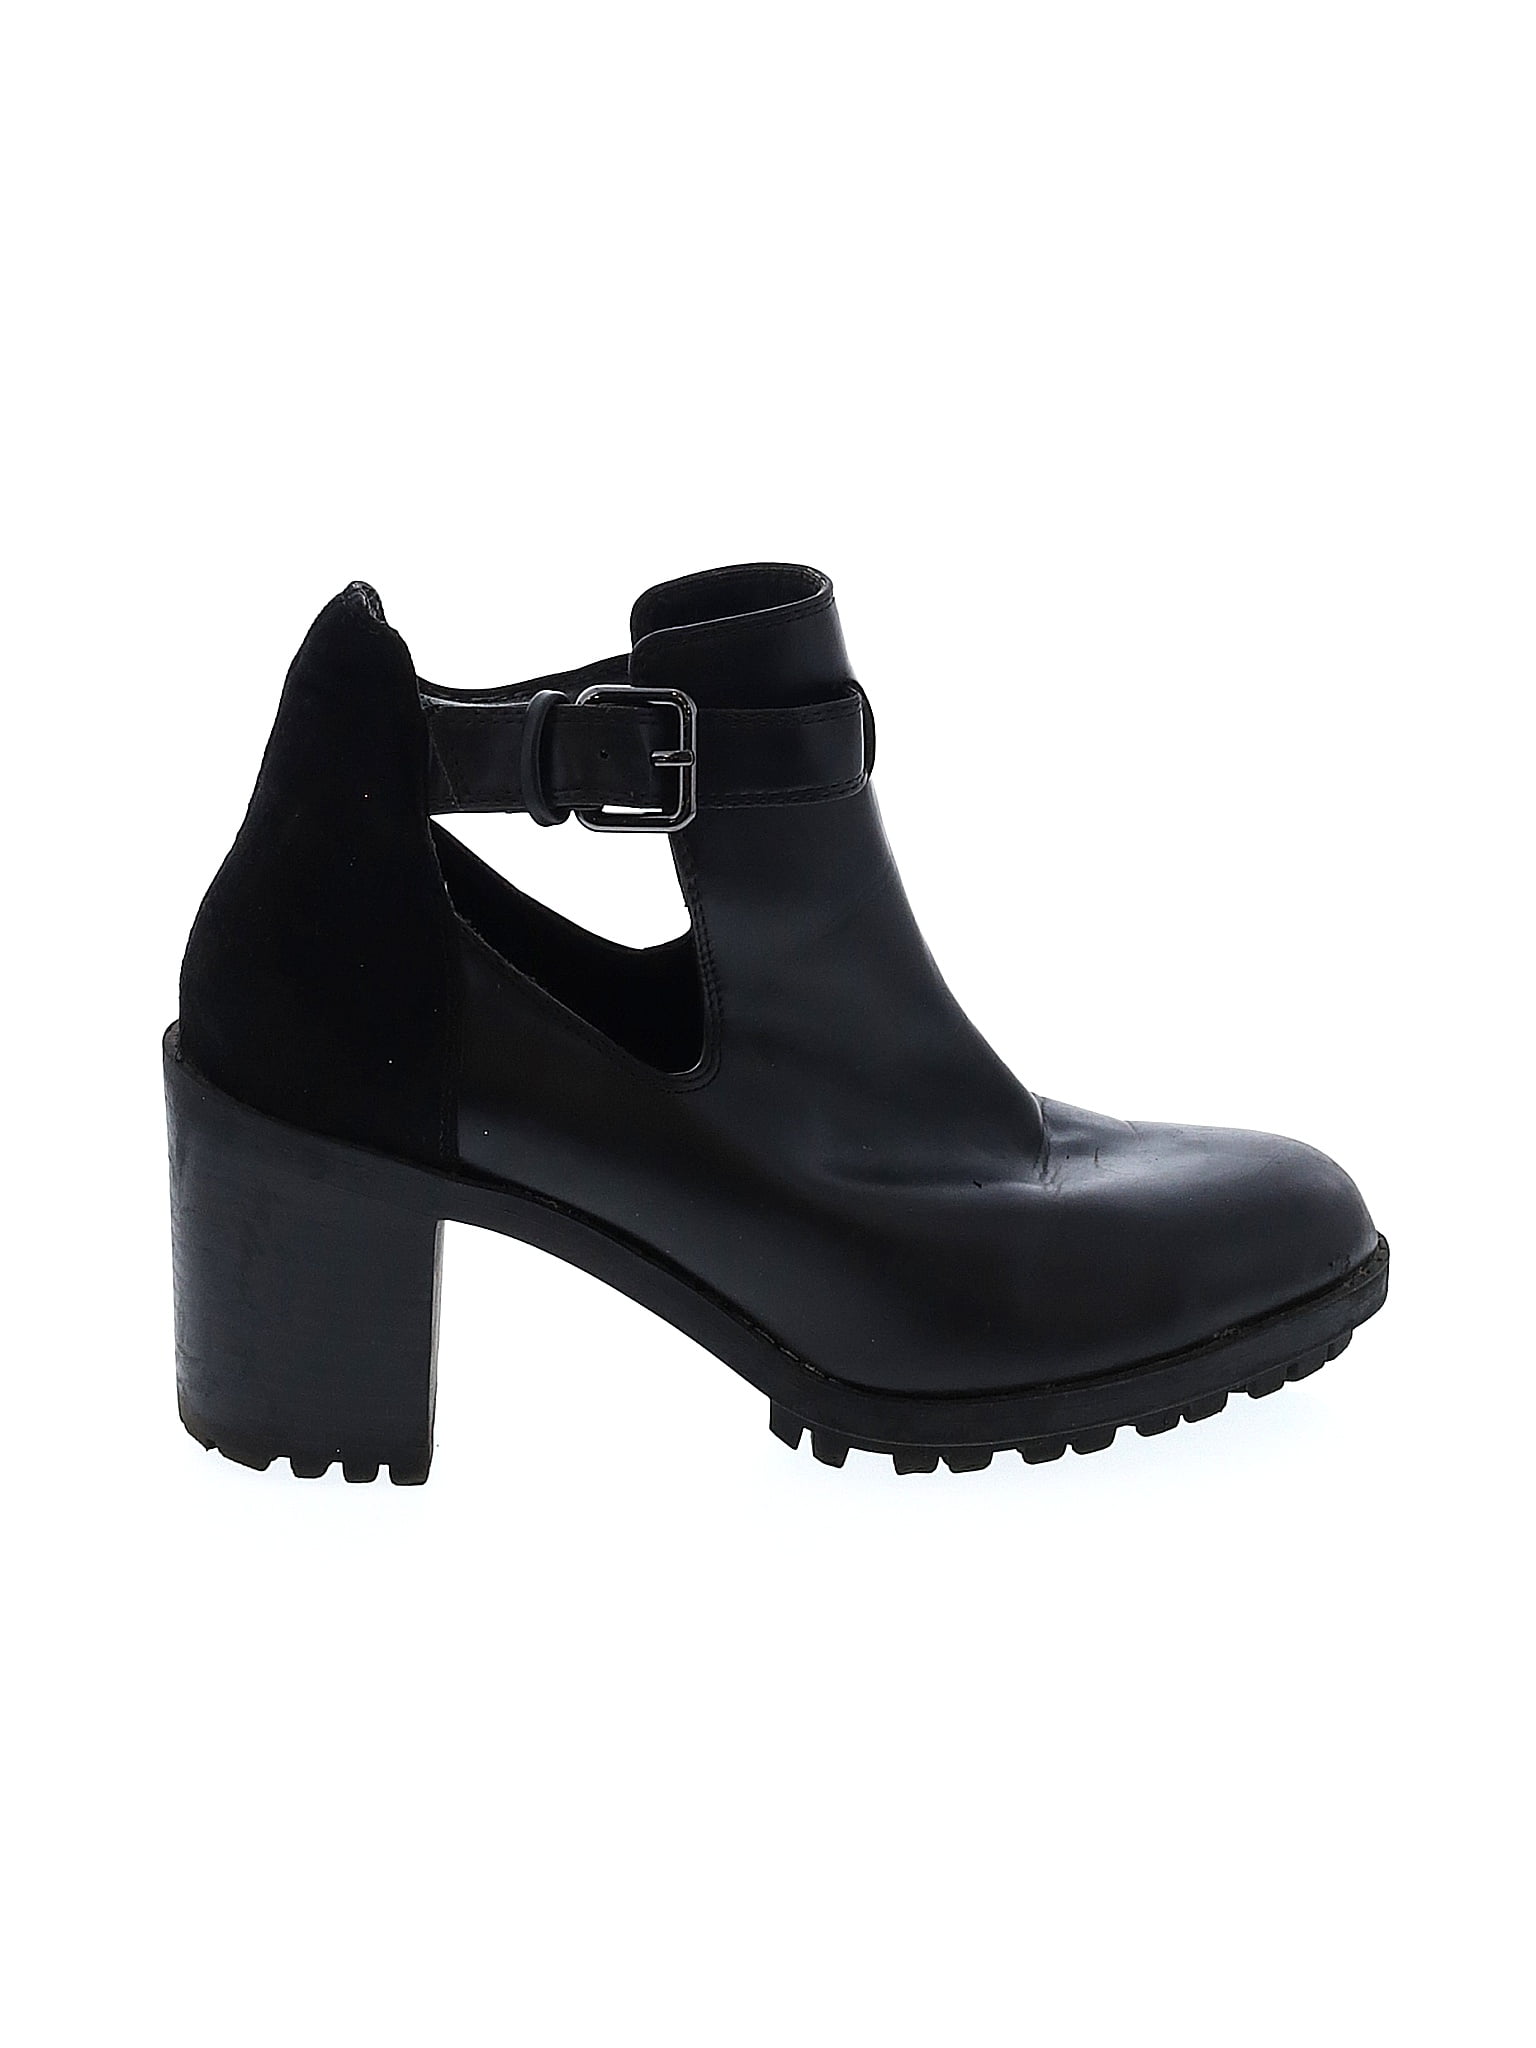 Zara Black Ankle Boots Size 41 (EU) - 53% off | thredUP